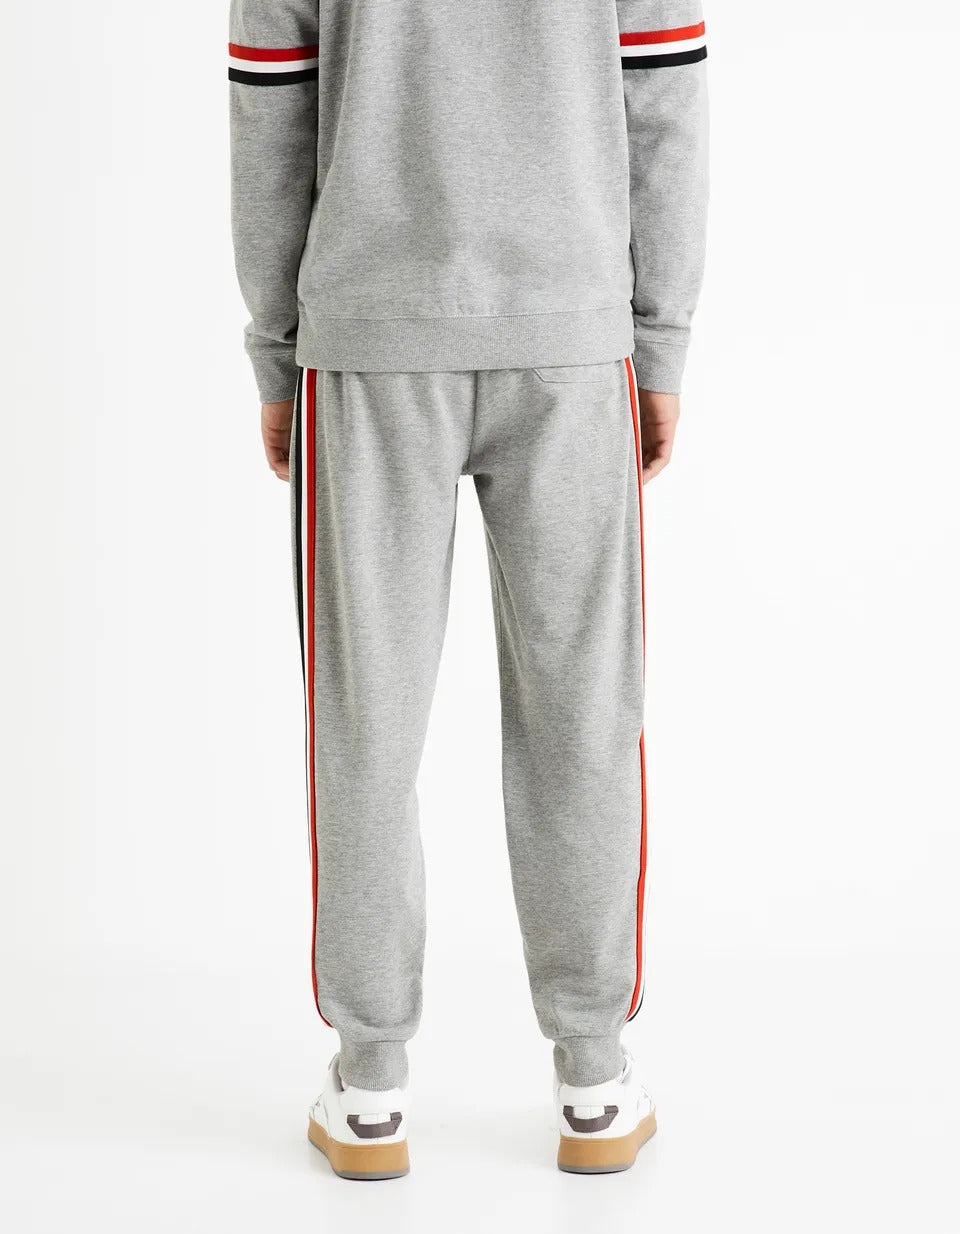 Jogging Pants 100% Cotton - Gray - 03